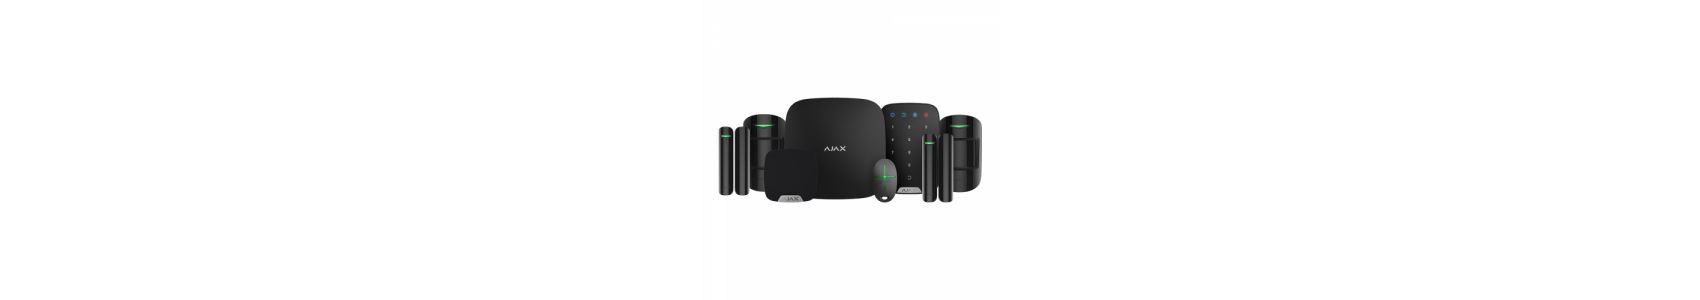 Sistem Alarma Wireless Ajax